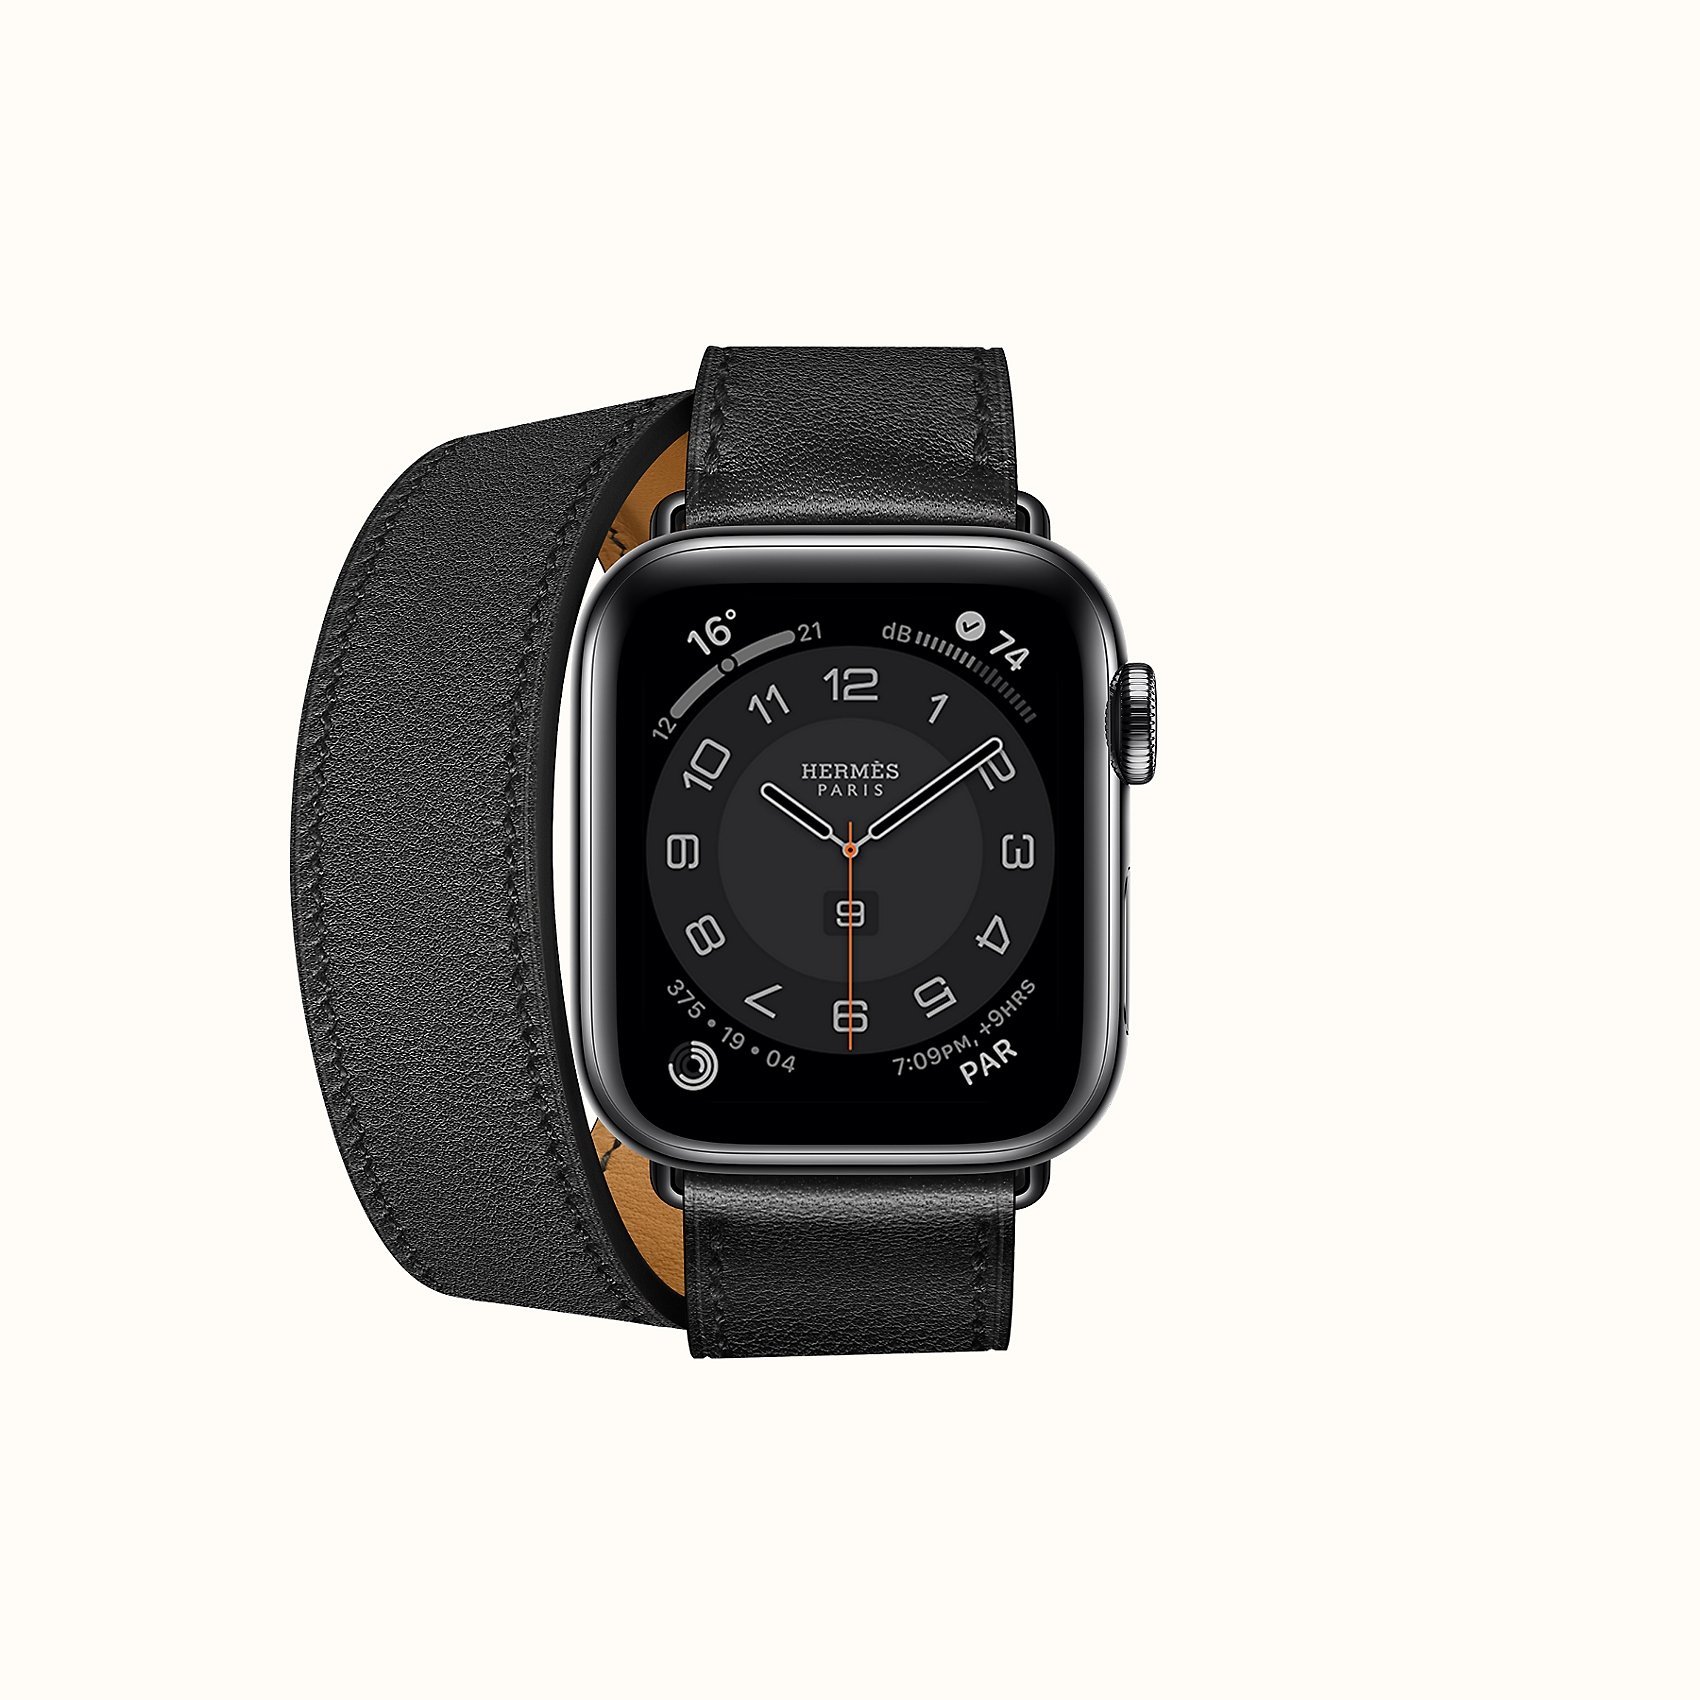 The Apple Watch looking stunning on a Orange Hermes style watch strap!!! # AppleWatch #HermesStrap #band…